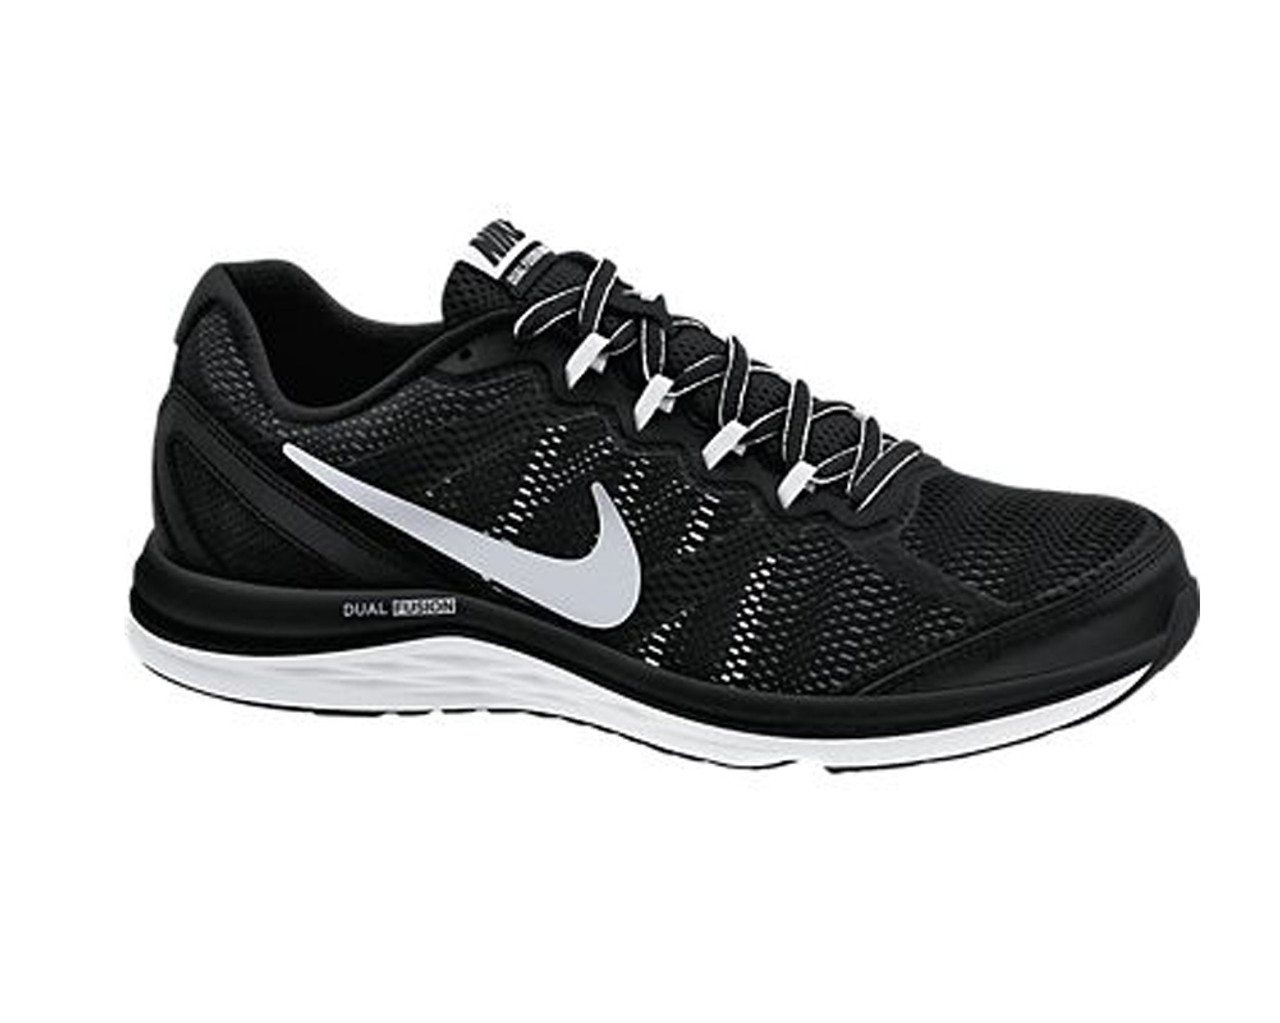 Nike Men's Run 3 Running Shoes - Black | Discount Nike Men's & More - Shoolu.com | Shoolu.com